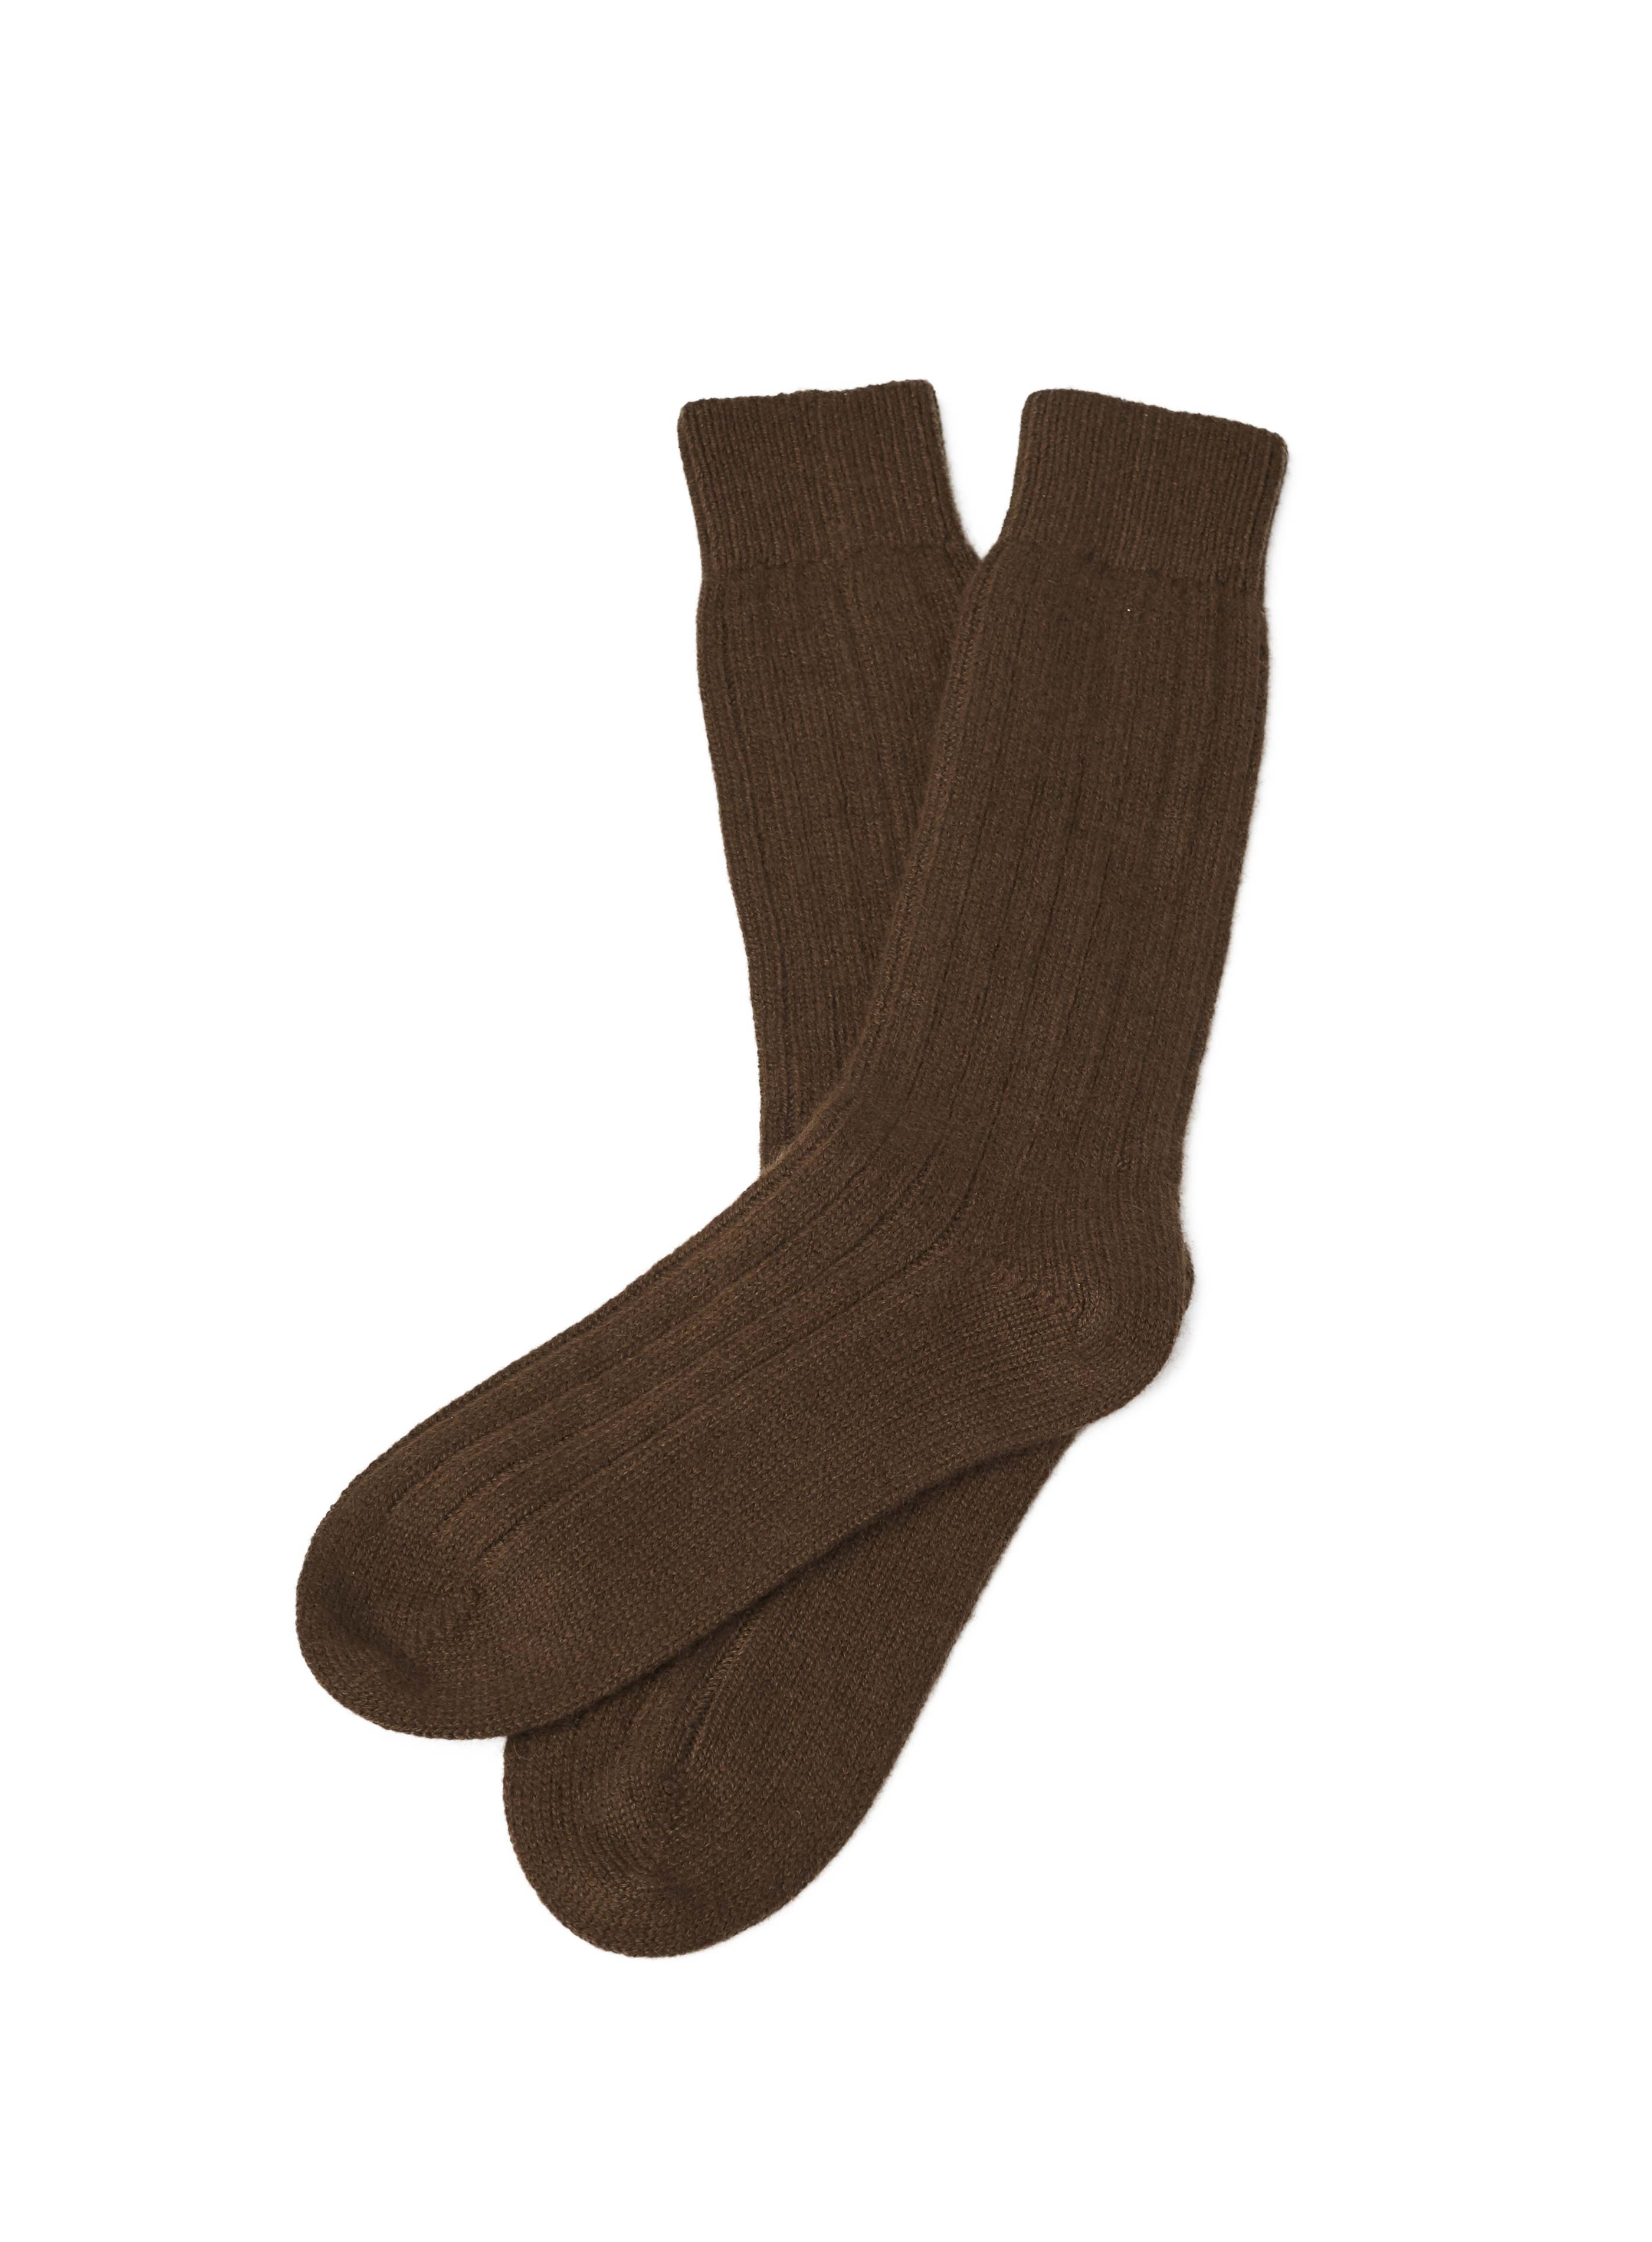 Pure Cashmere Socks (Espresso, Large/Extra Large)